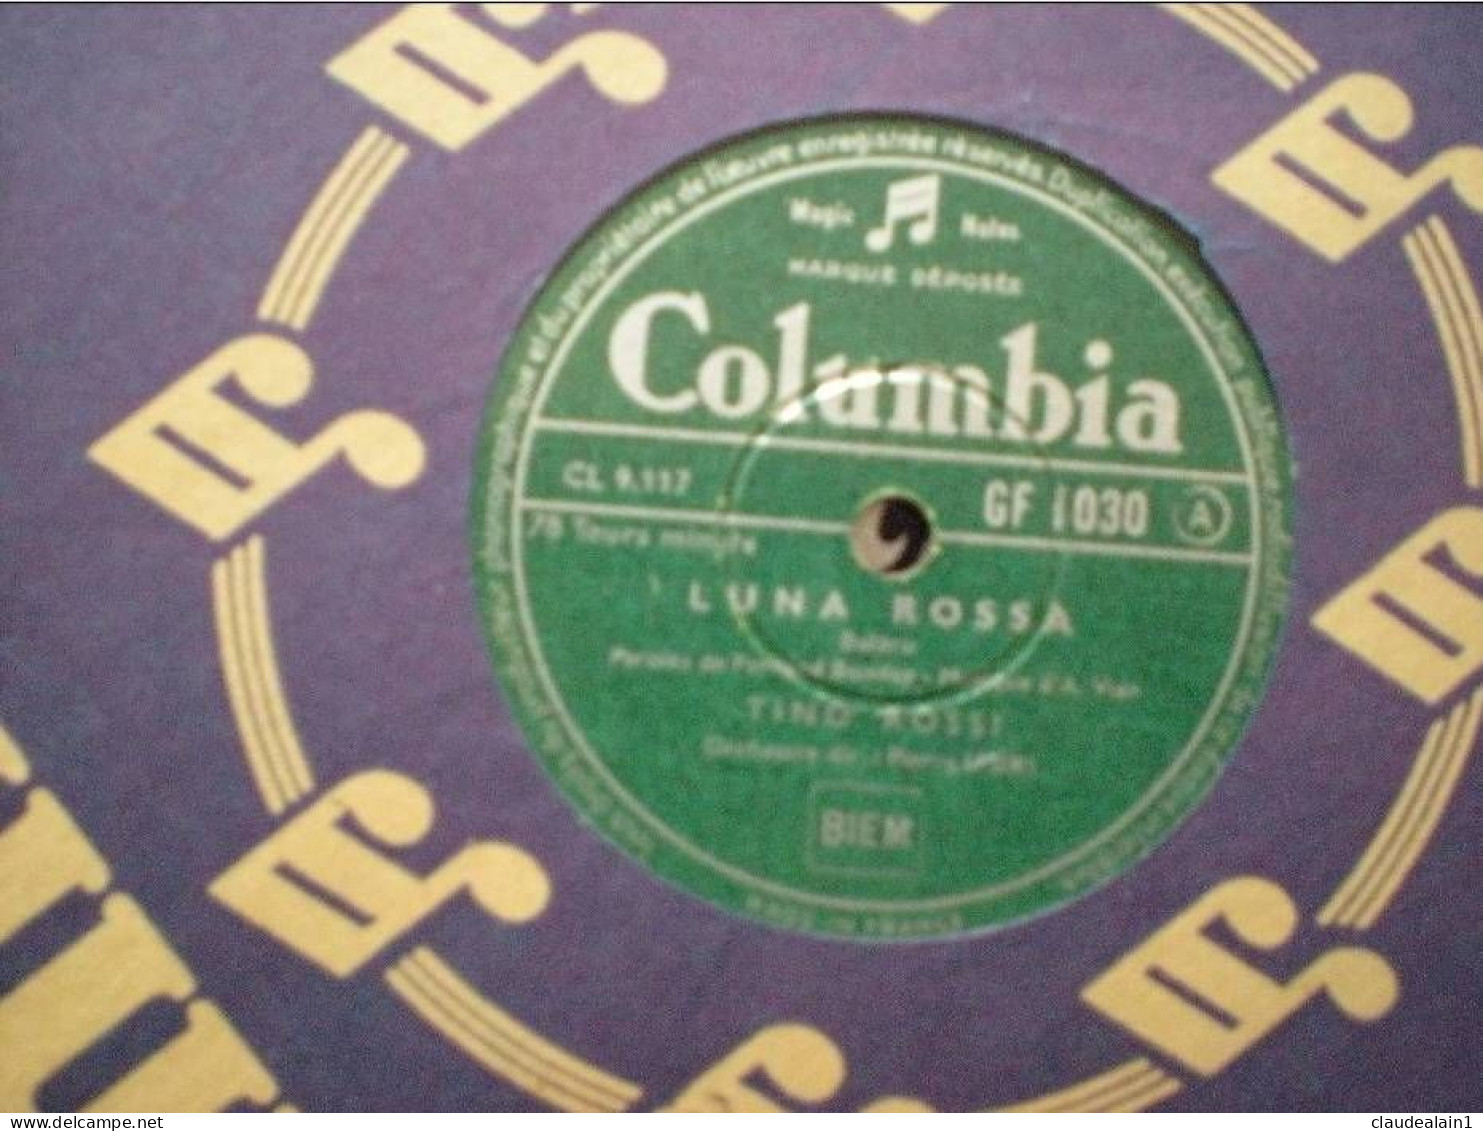 DISQUE COLUMBIA VINYLE 78T - TINO ROSSI - LUNA ROSSA - SI JAMAIS - 78 T - Disques Pour Gramophone